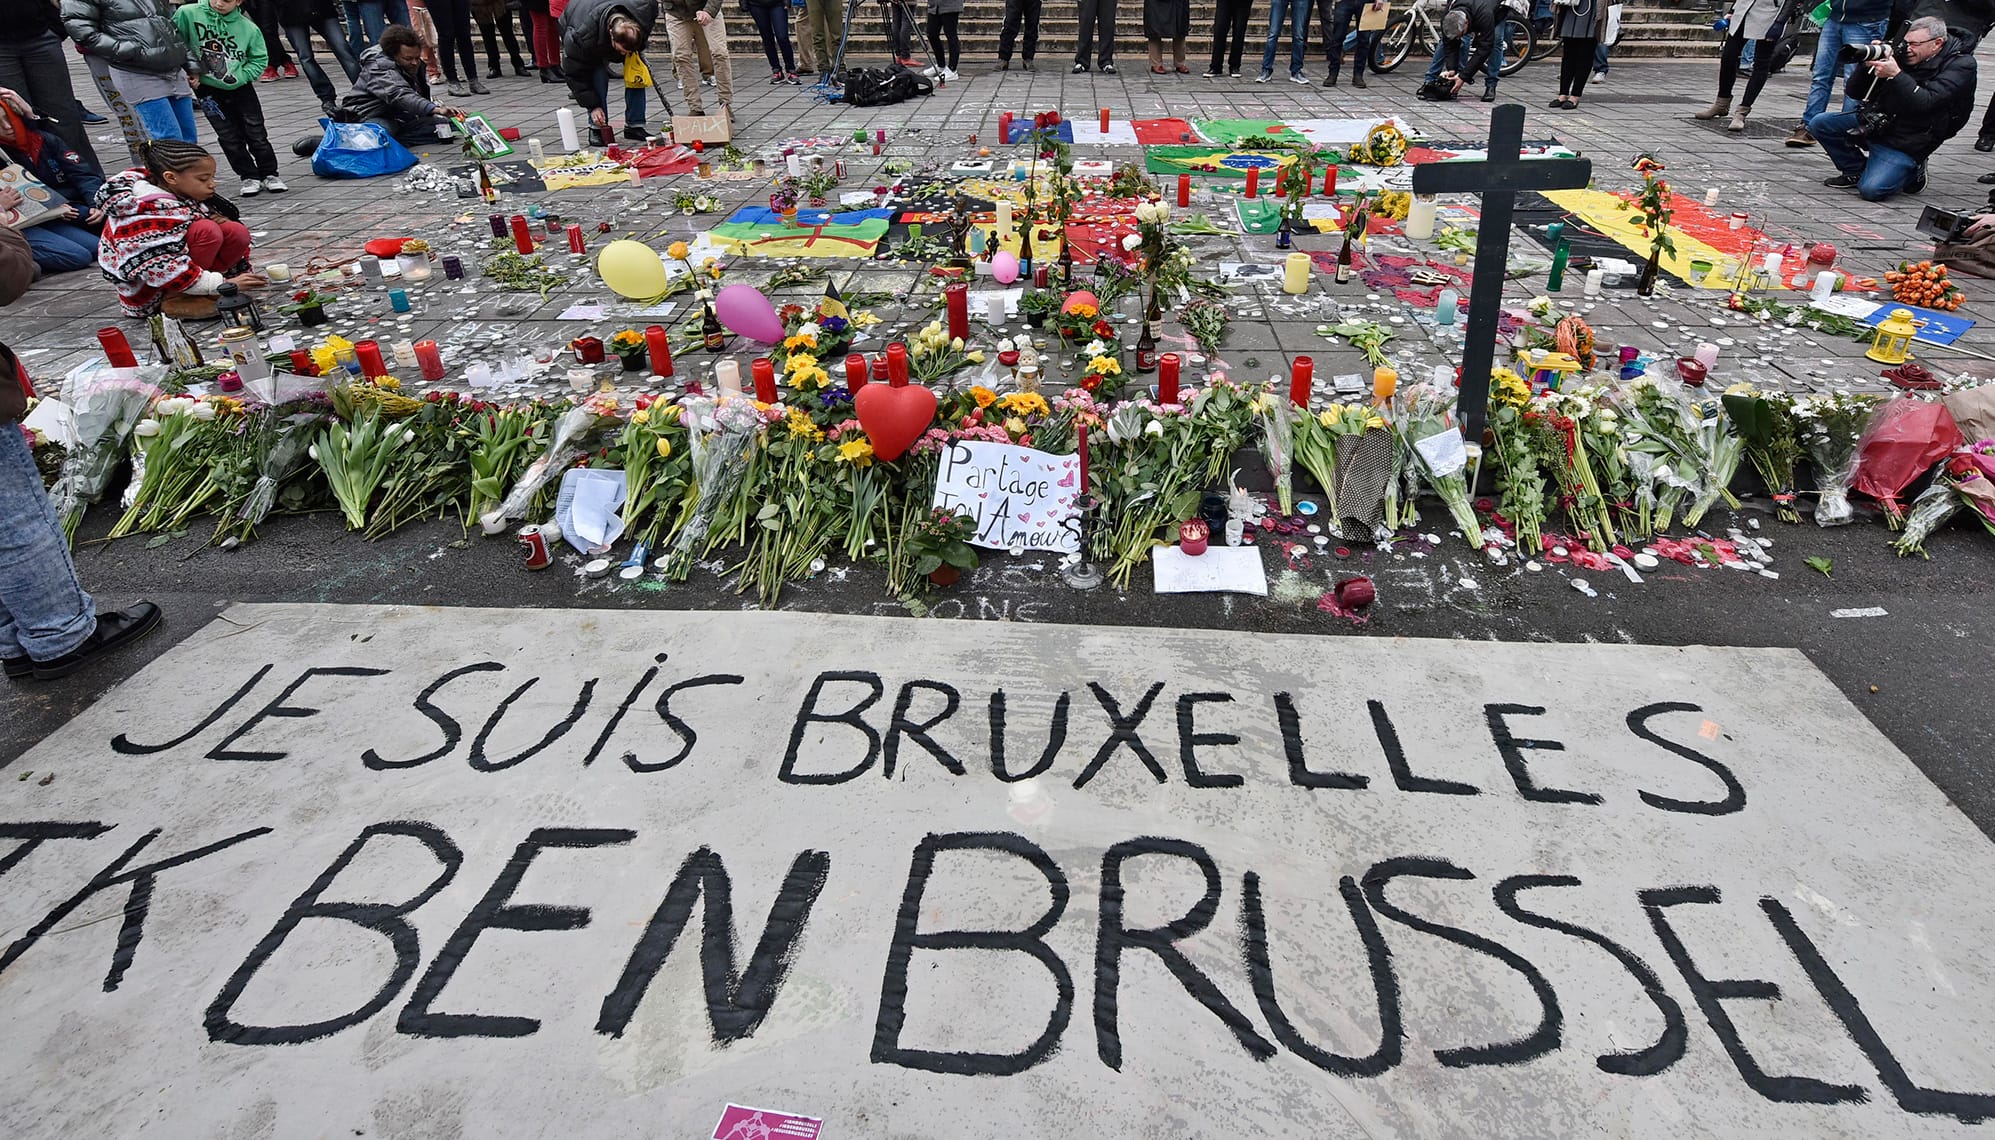 Belgium arrests new Brussels attacks suspect: Prosecutor